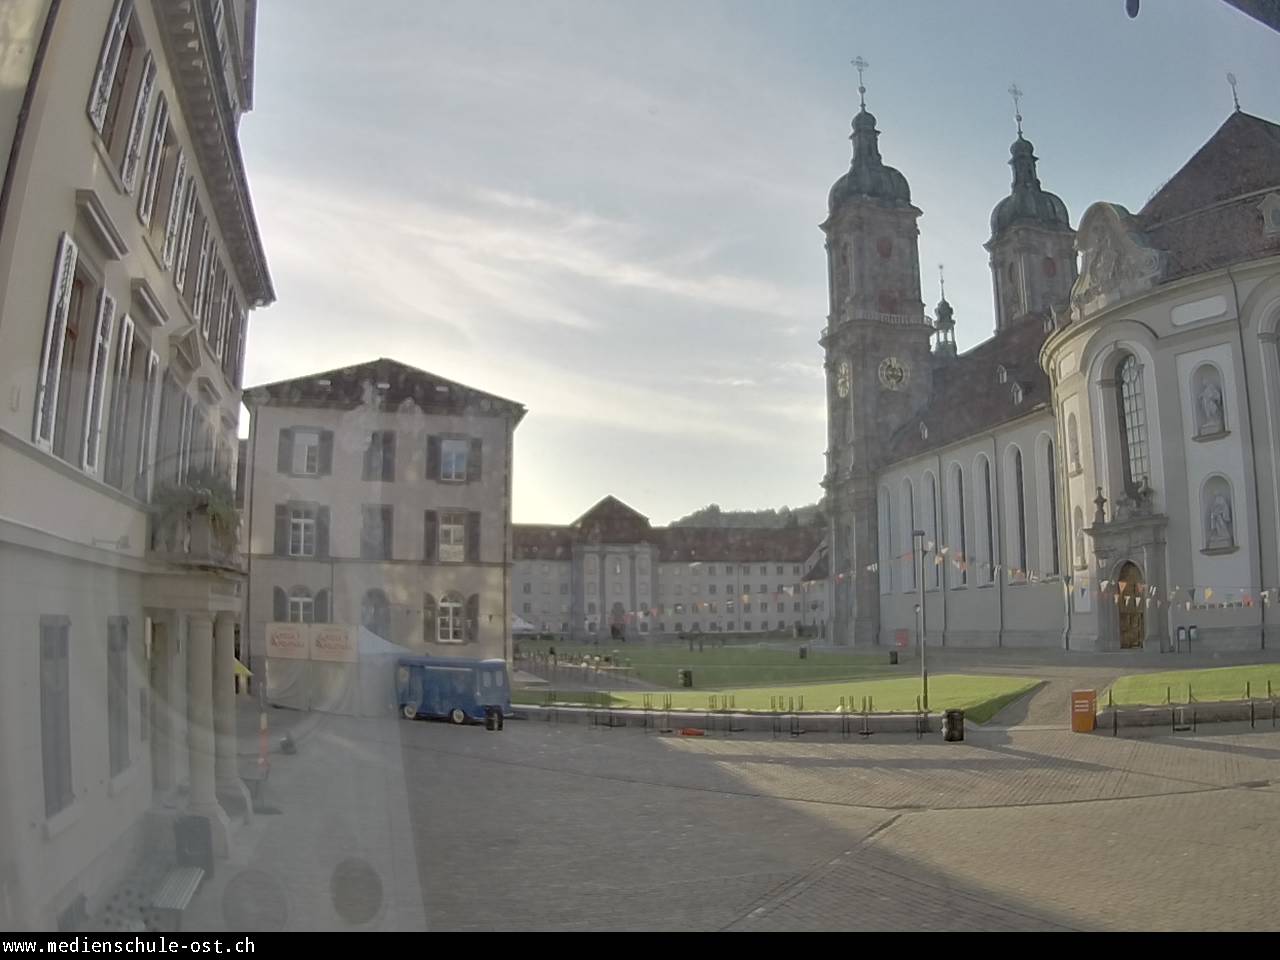 St. Gallen Tor. 06:46